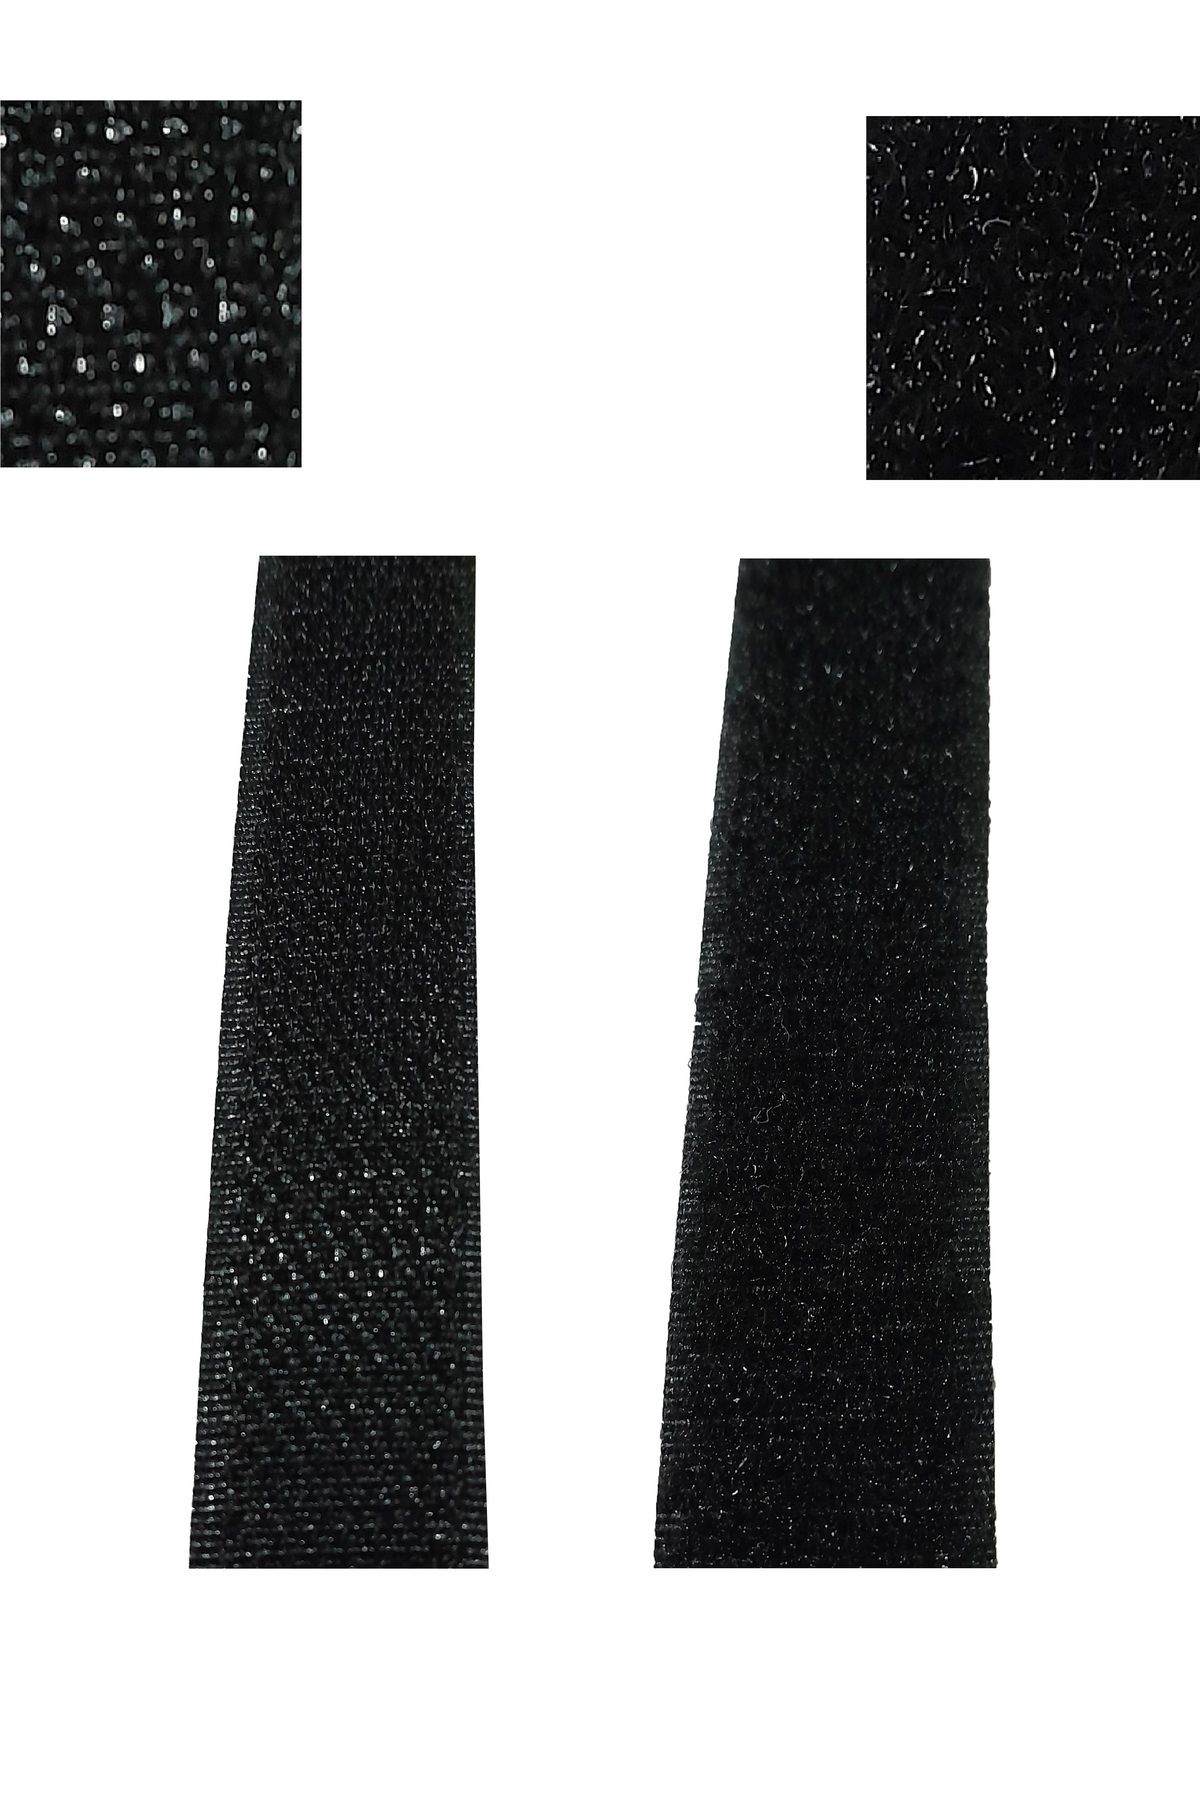 U5 FASHION cırt cırt bant dikilebilir tamir bandı tek taraflı 2 santim genişlik 3 metre boyu